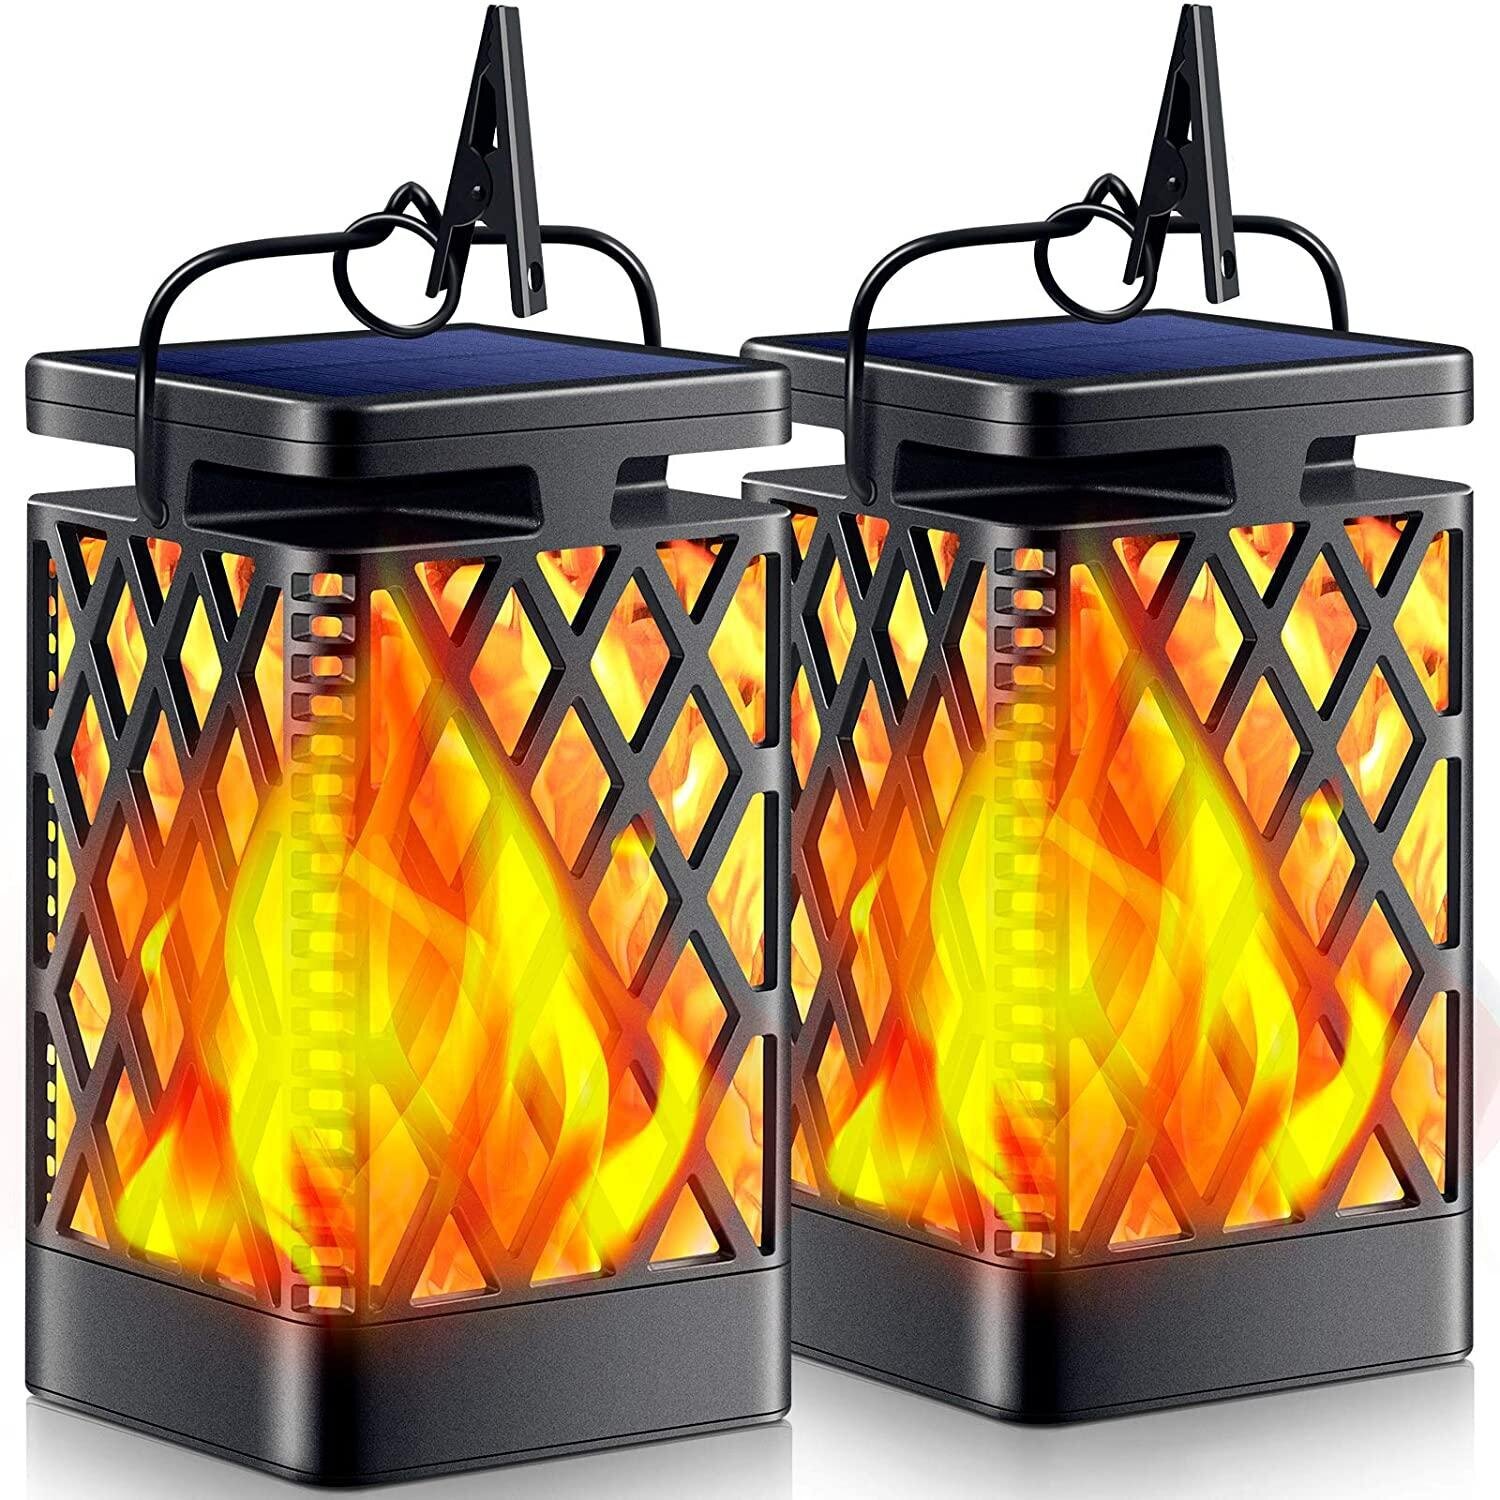 Versatile outdoor flame lanterns